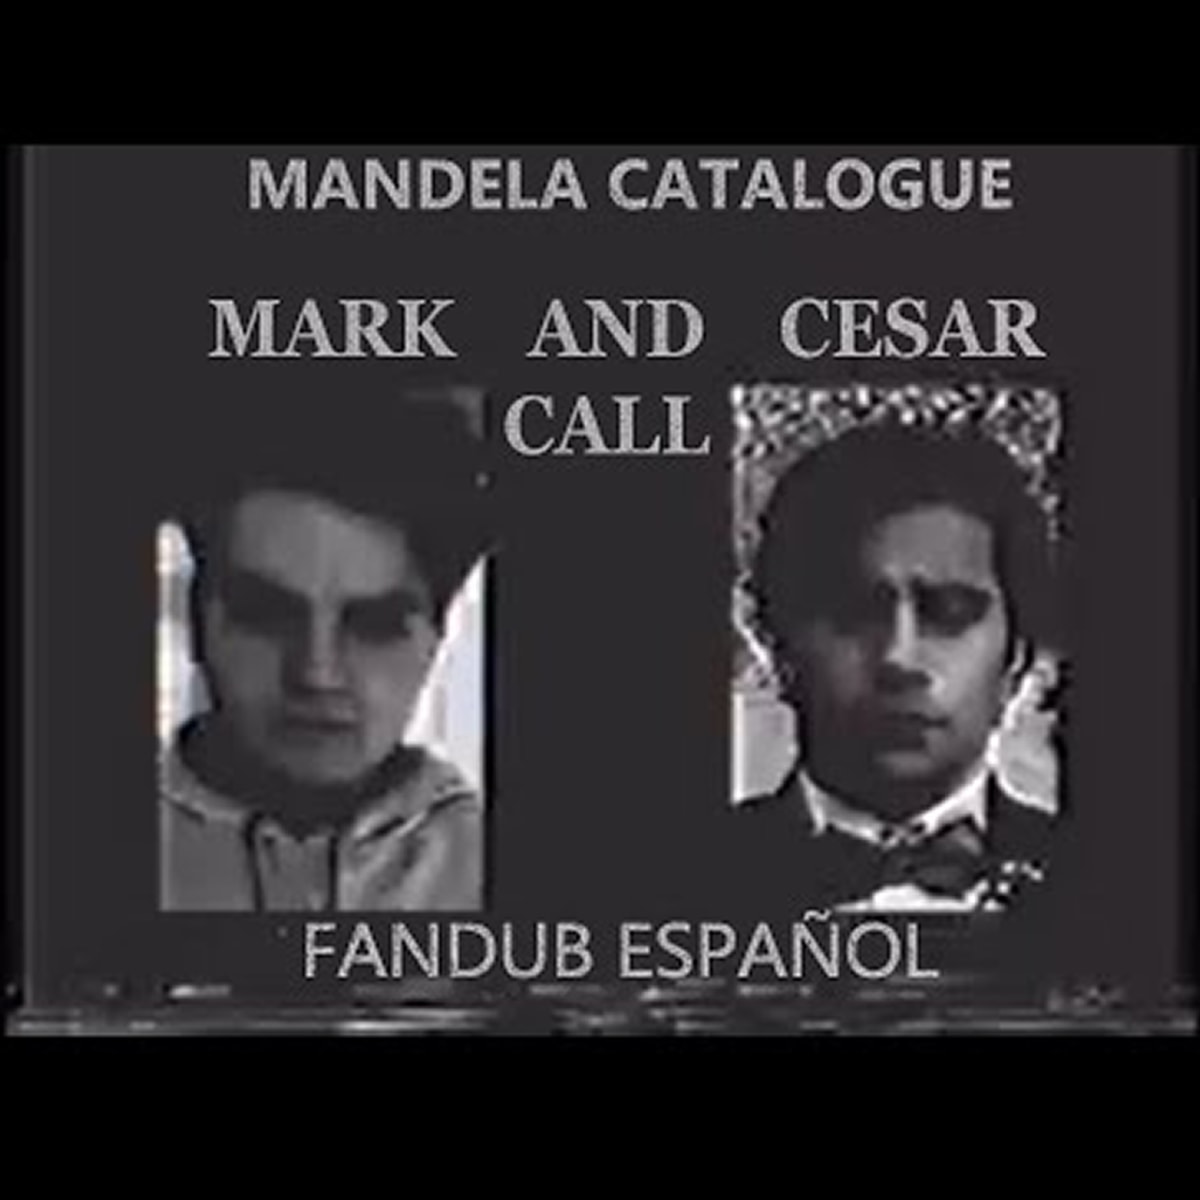 Mark and Cesar call [MANDELA CATALOGUE] (FANDUB ESPAÑOL)